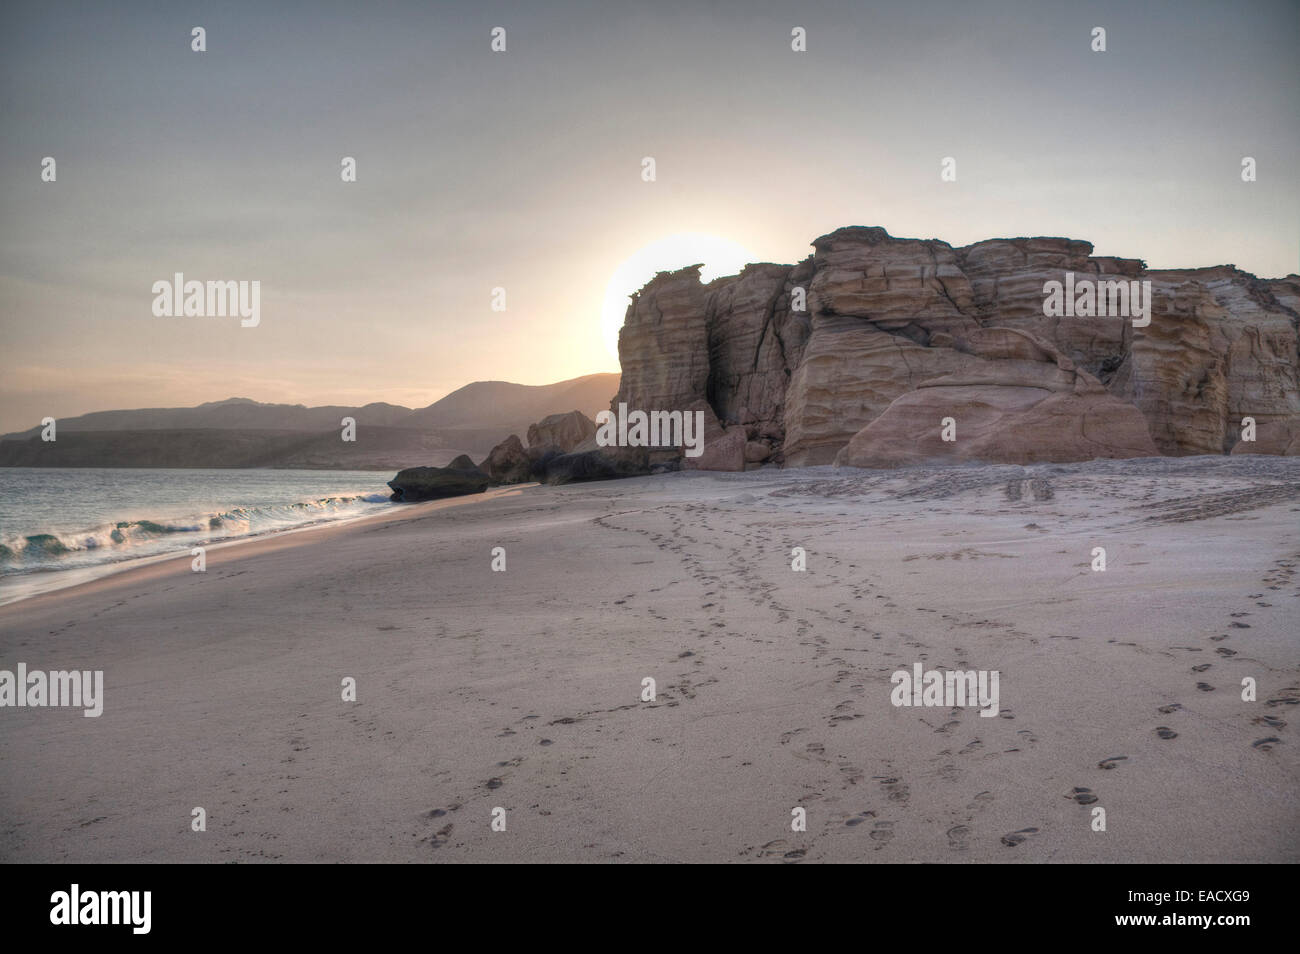 Beach in Ras al Jinz, Oman Stock Photo